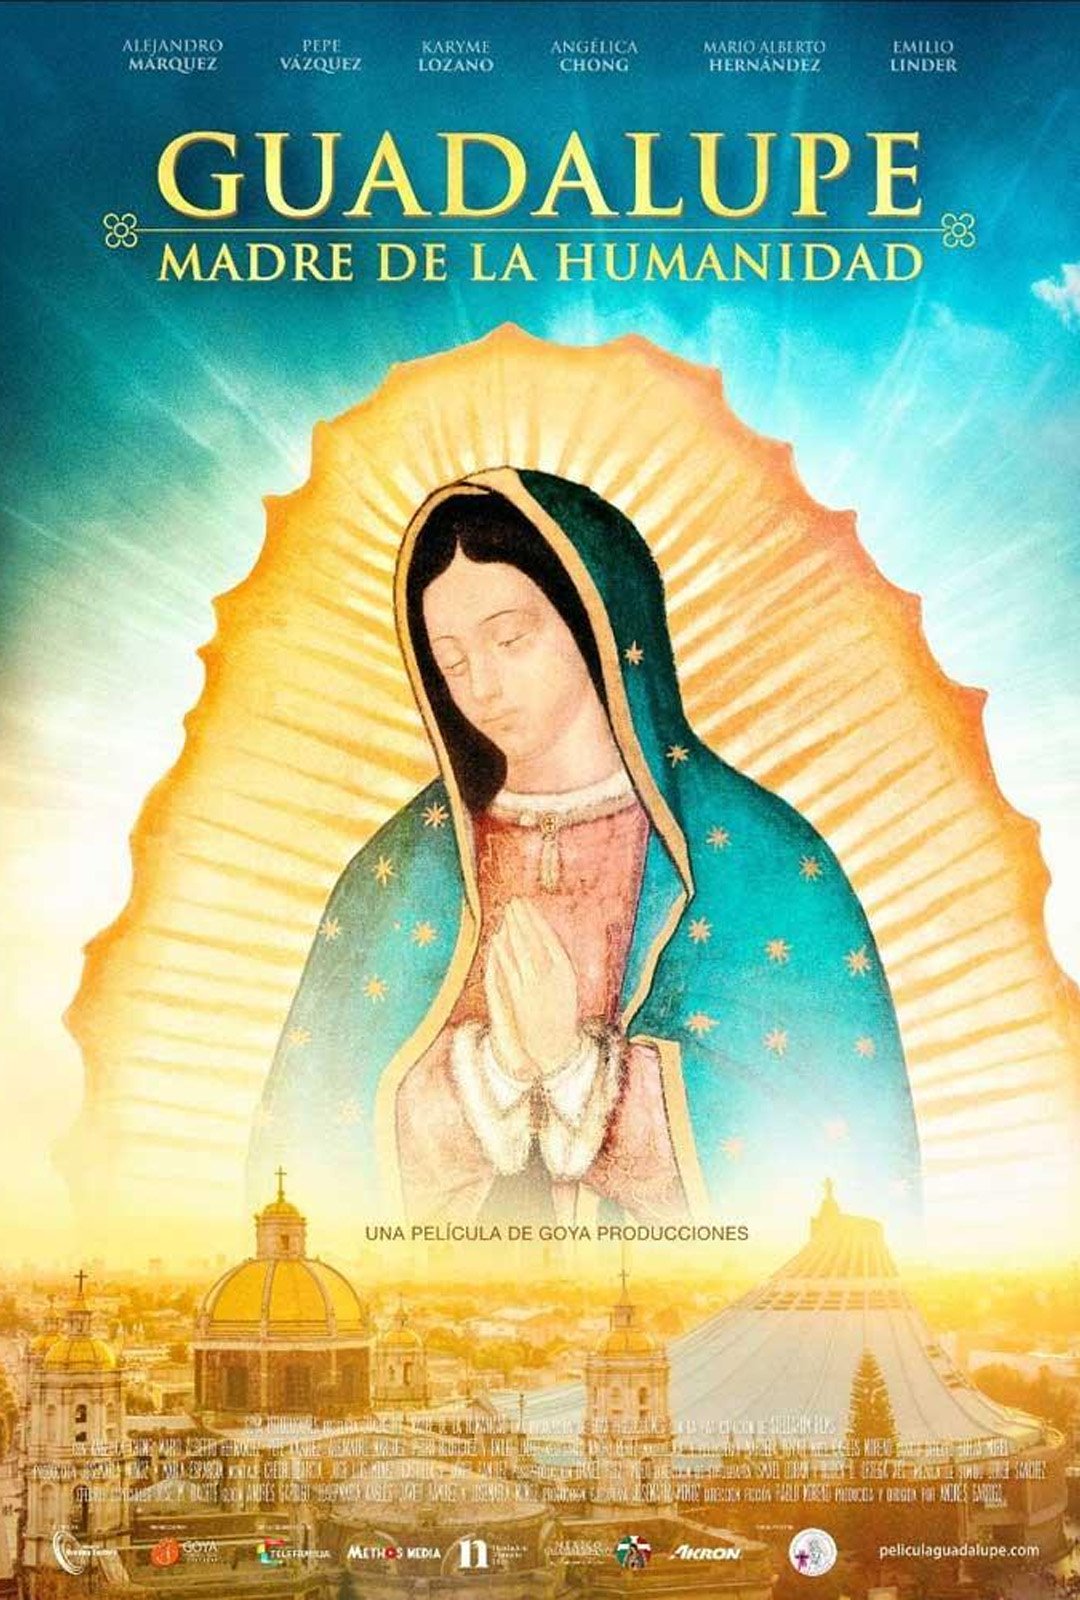 Movie Poster: Guadalupe Madre de la Humanidad